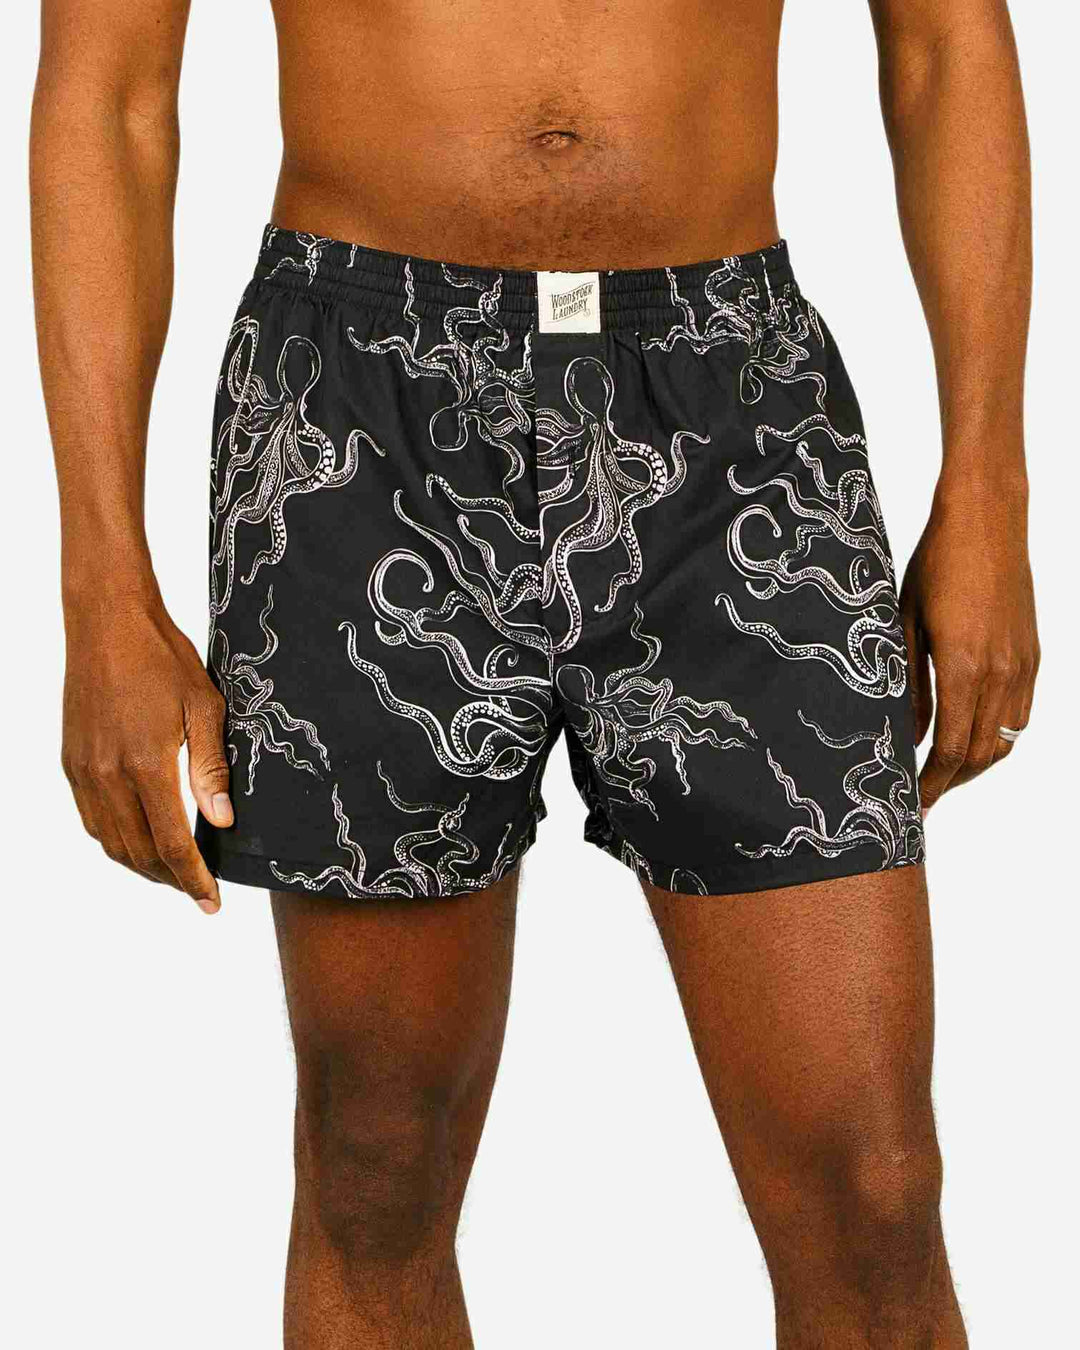 Mens boxer shorts - octopus black